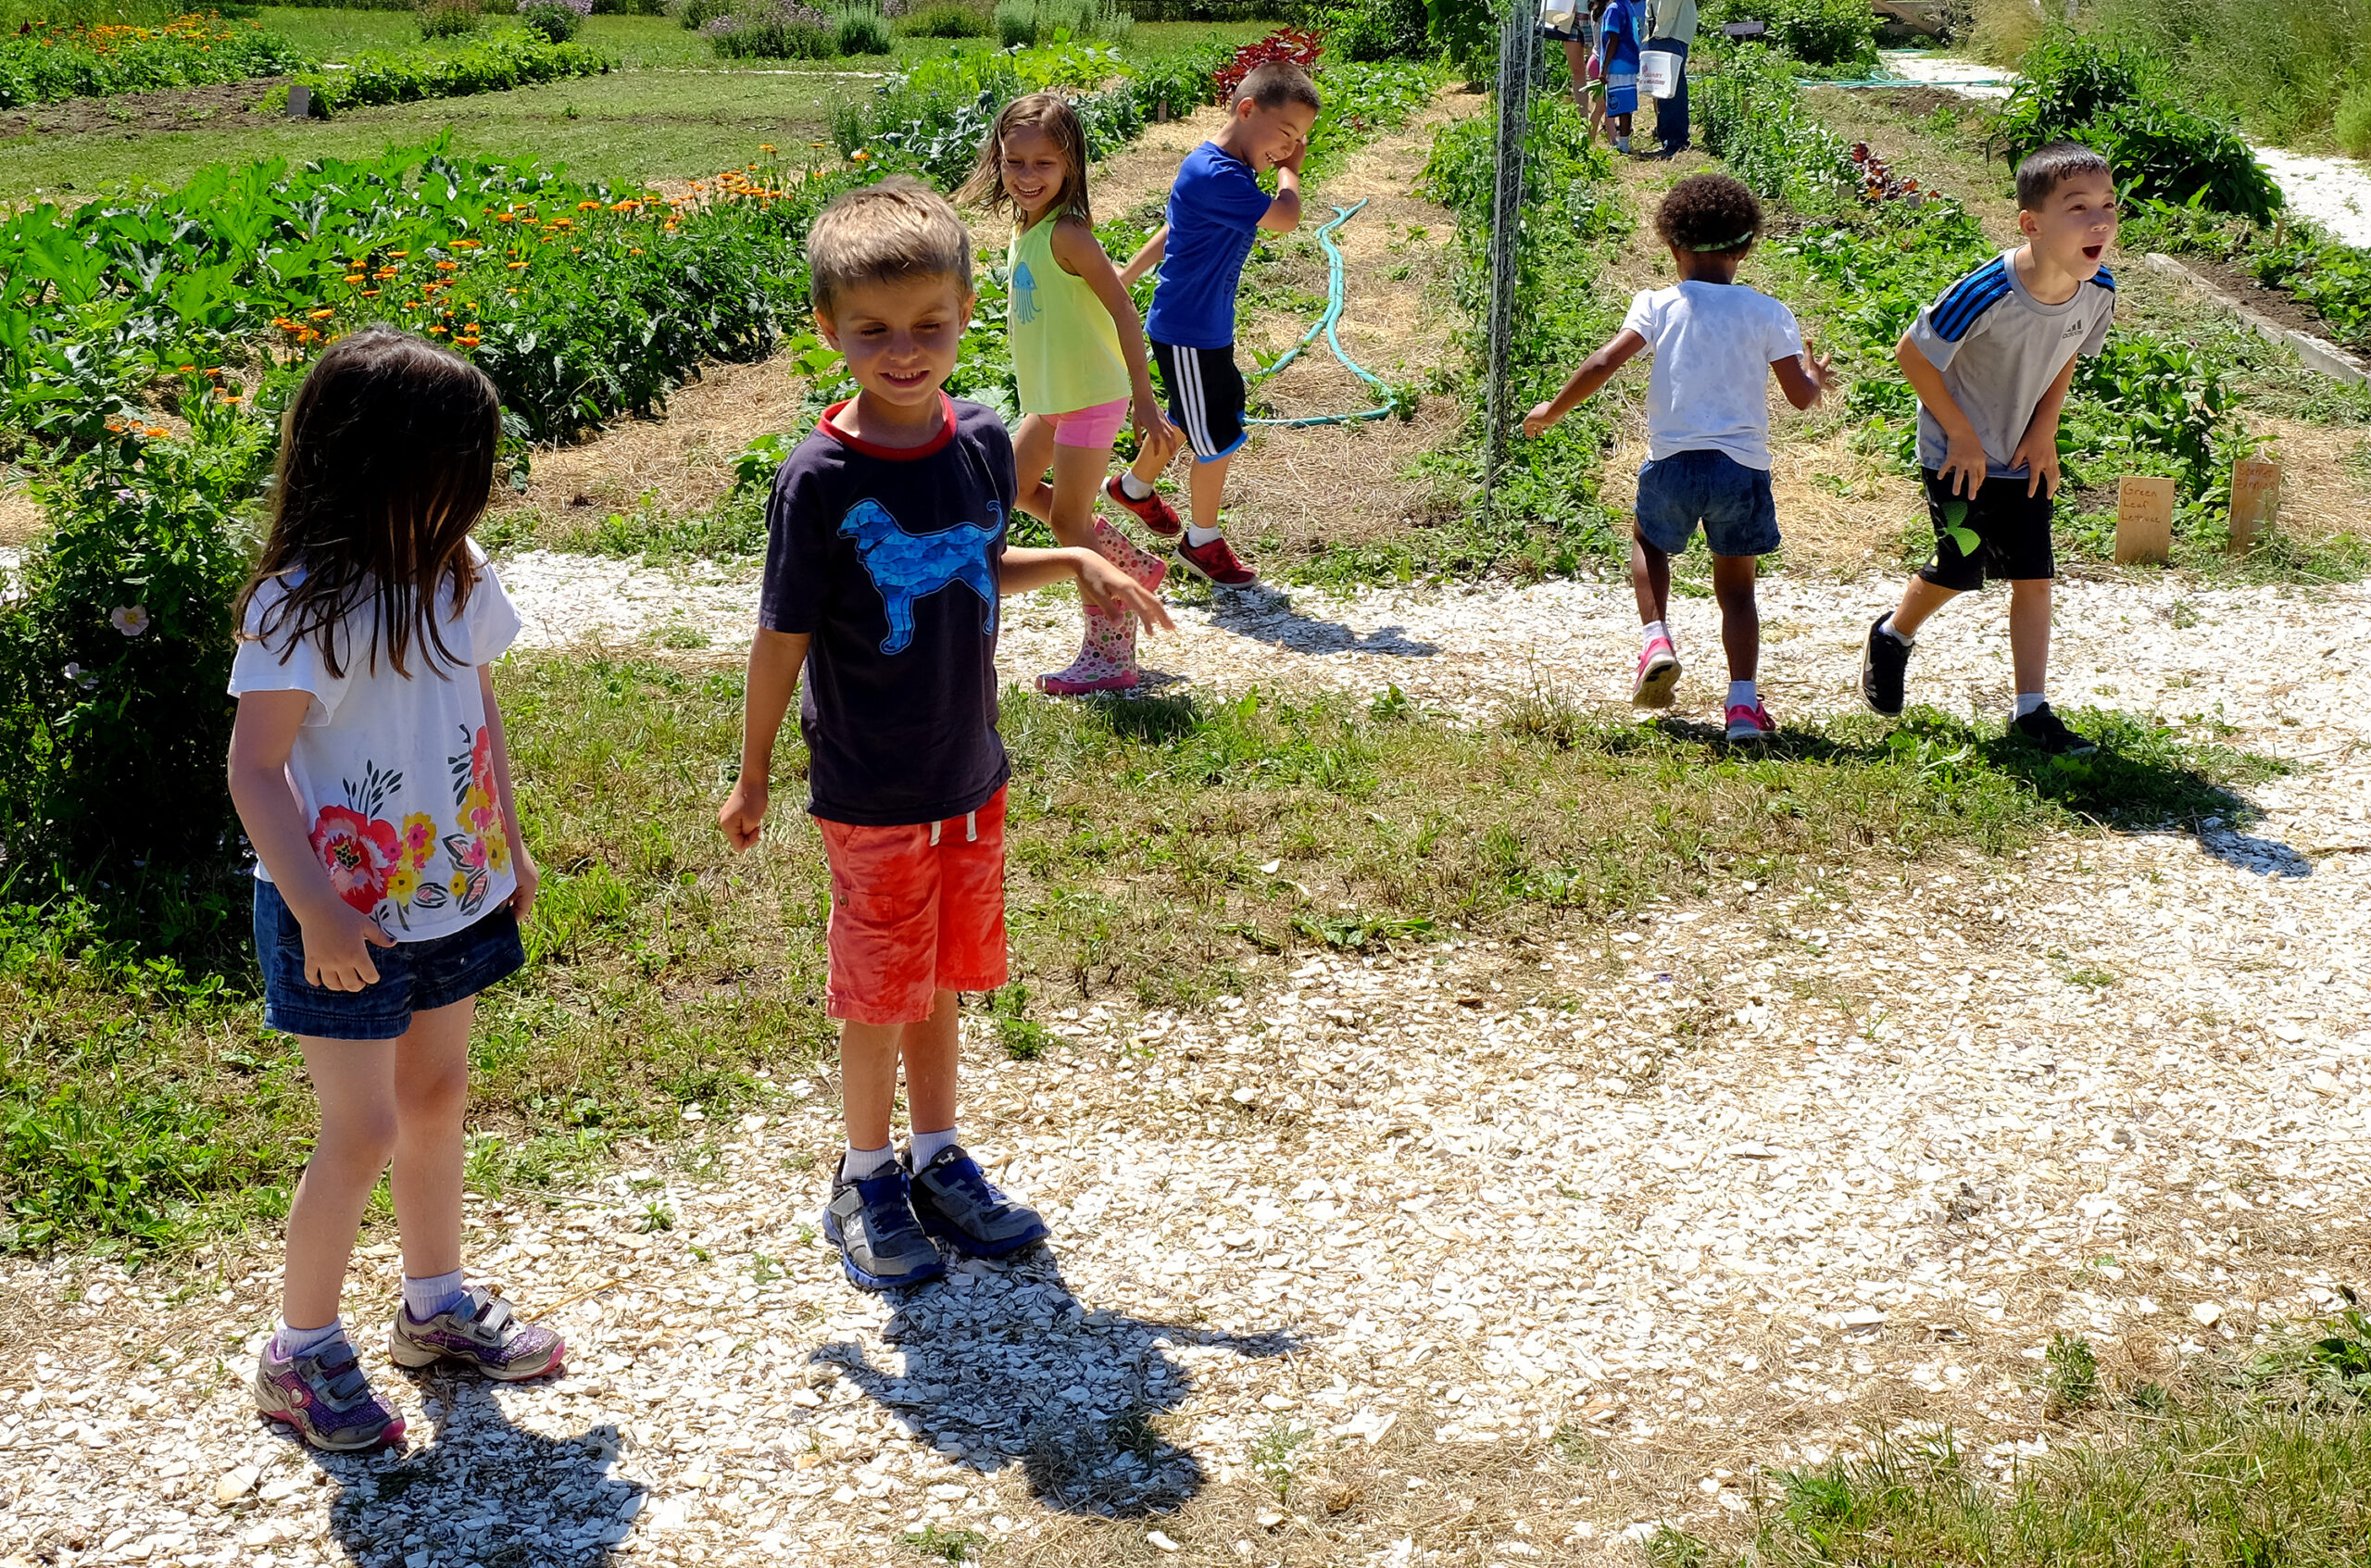 Several children outdoors around a garden at The Farm Institute